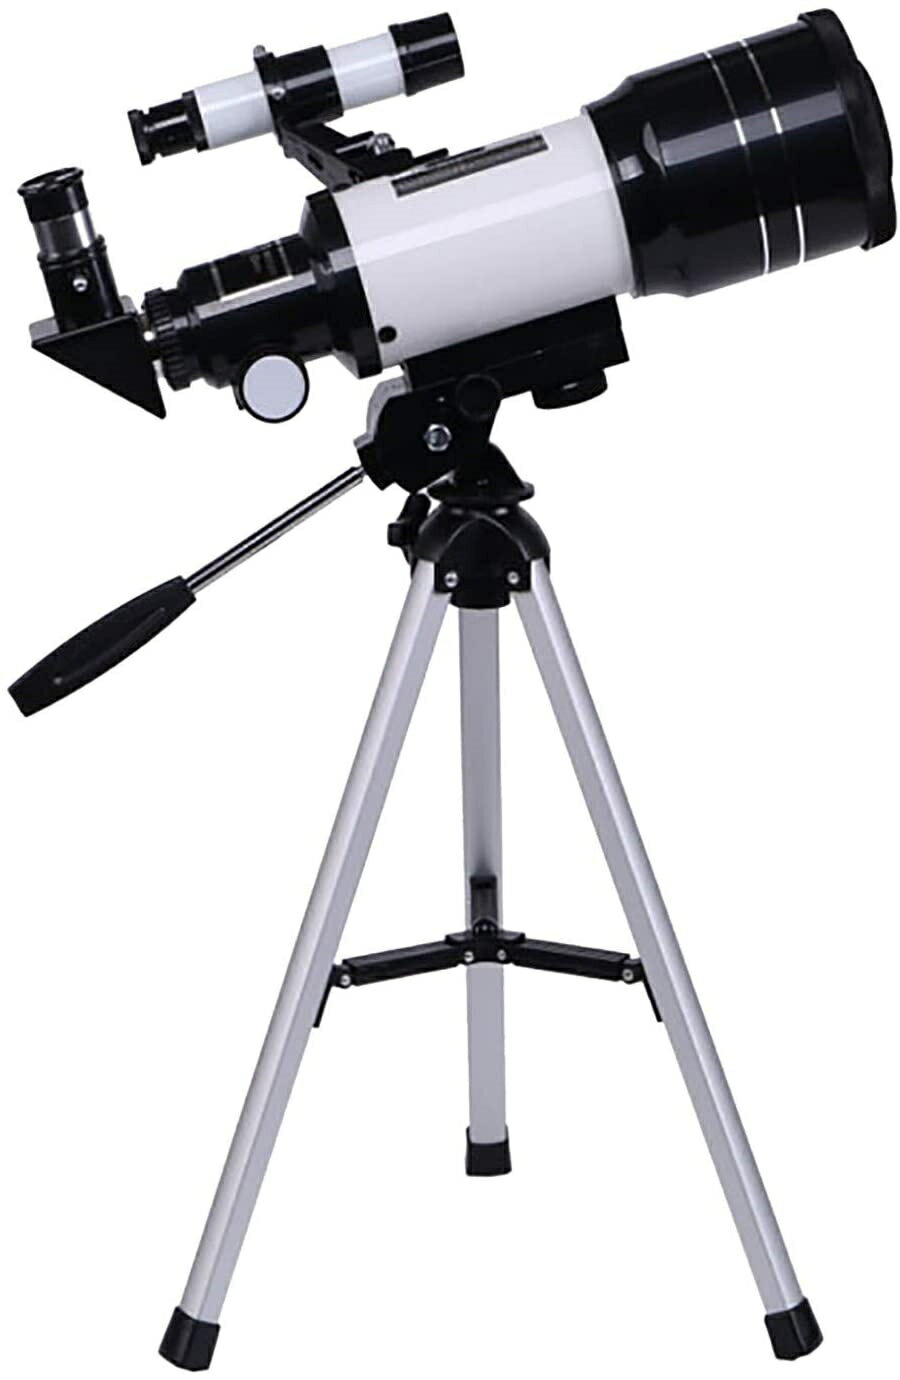 楽天Kingstar天体望遠鏡 単眼望遠鏡 150X70mm口径天体望遠鏡、初心者向け屈折望遠鏡付き単眼望遠鏡、屋外キャンプハイキング用旅行望遠鏡【海外通販】